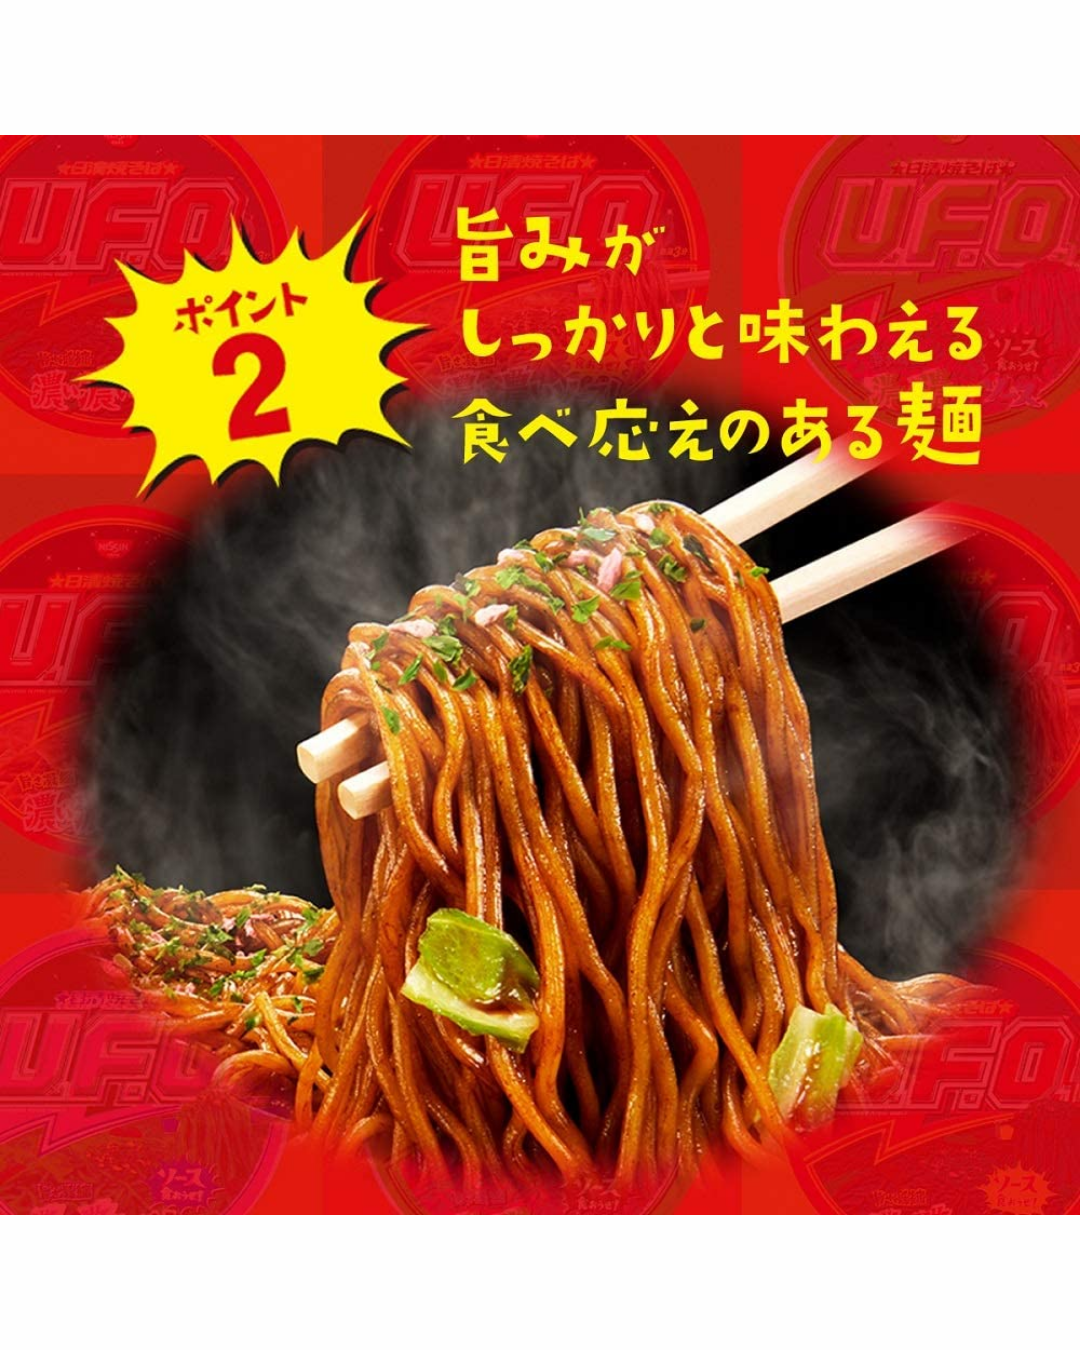 Nissin UFO Yakisoba Noodle - Unique Bunny